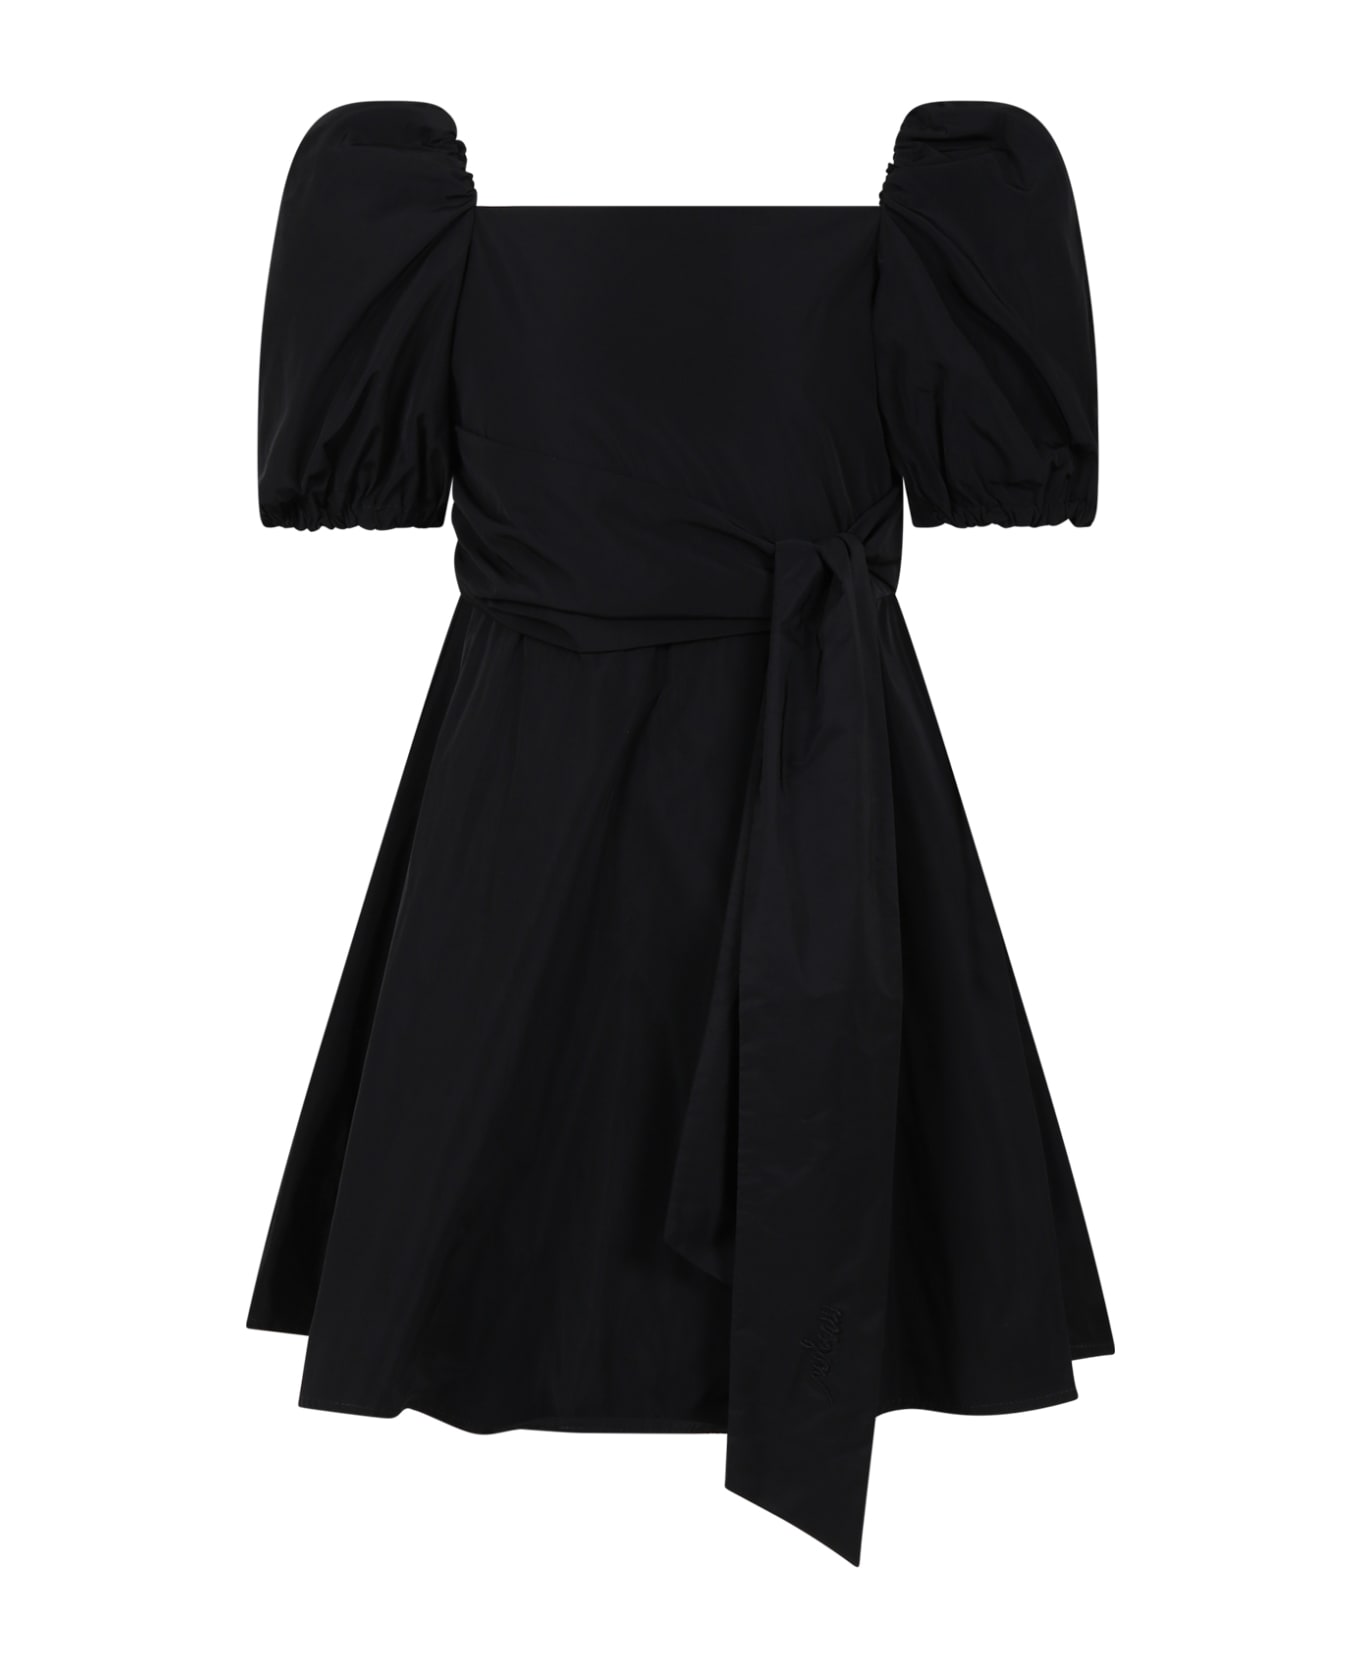 MSGM Black Dress For Girl With Logo - Black ワンピース＆ドレス